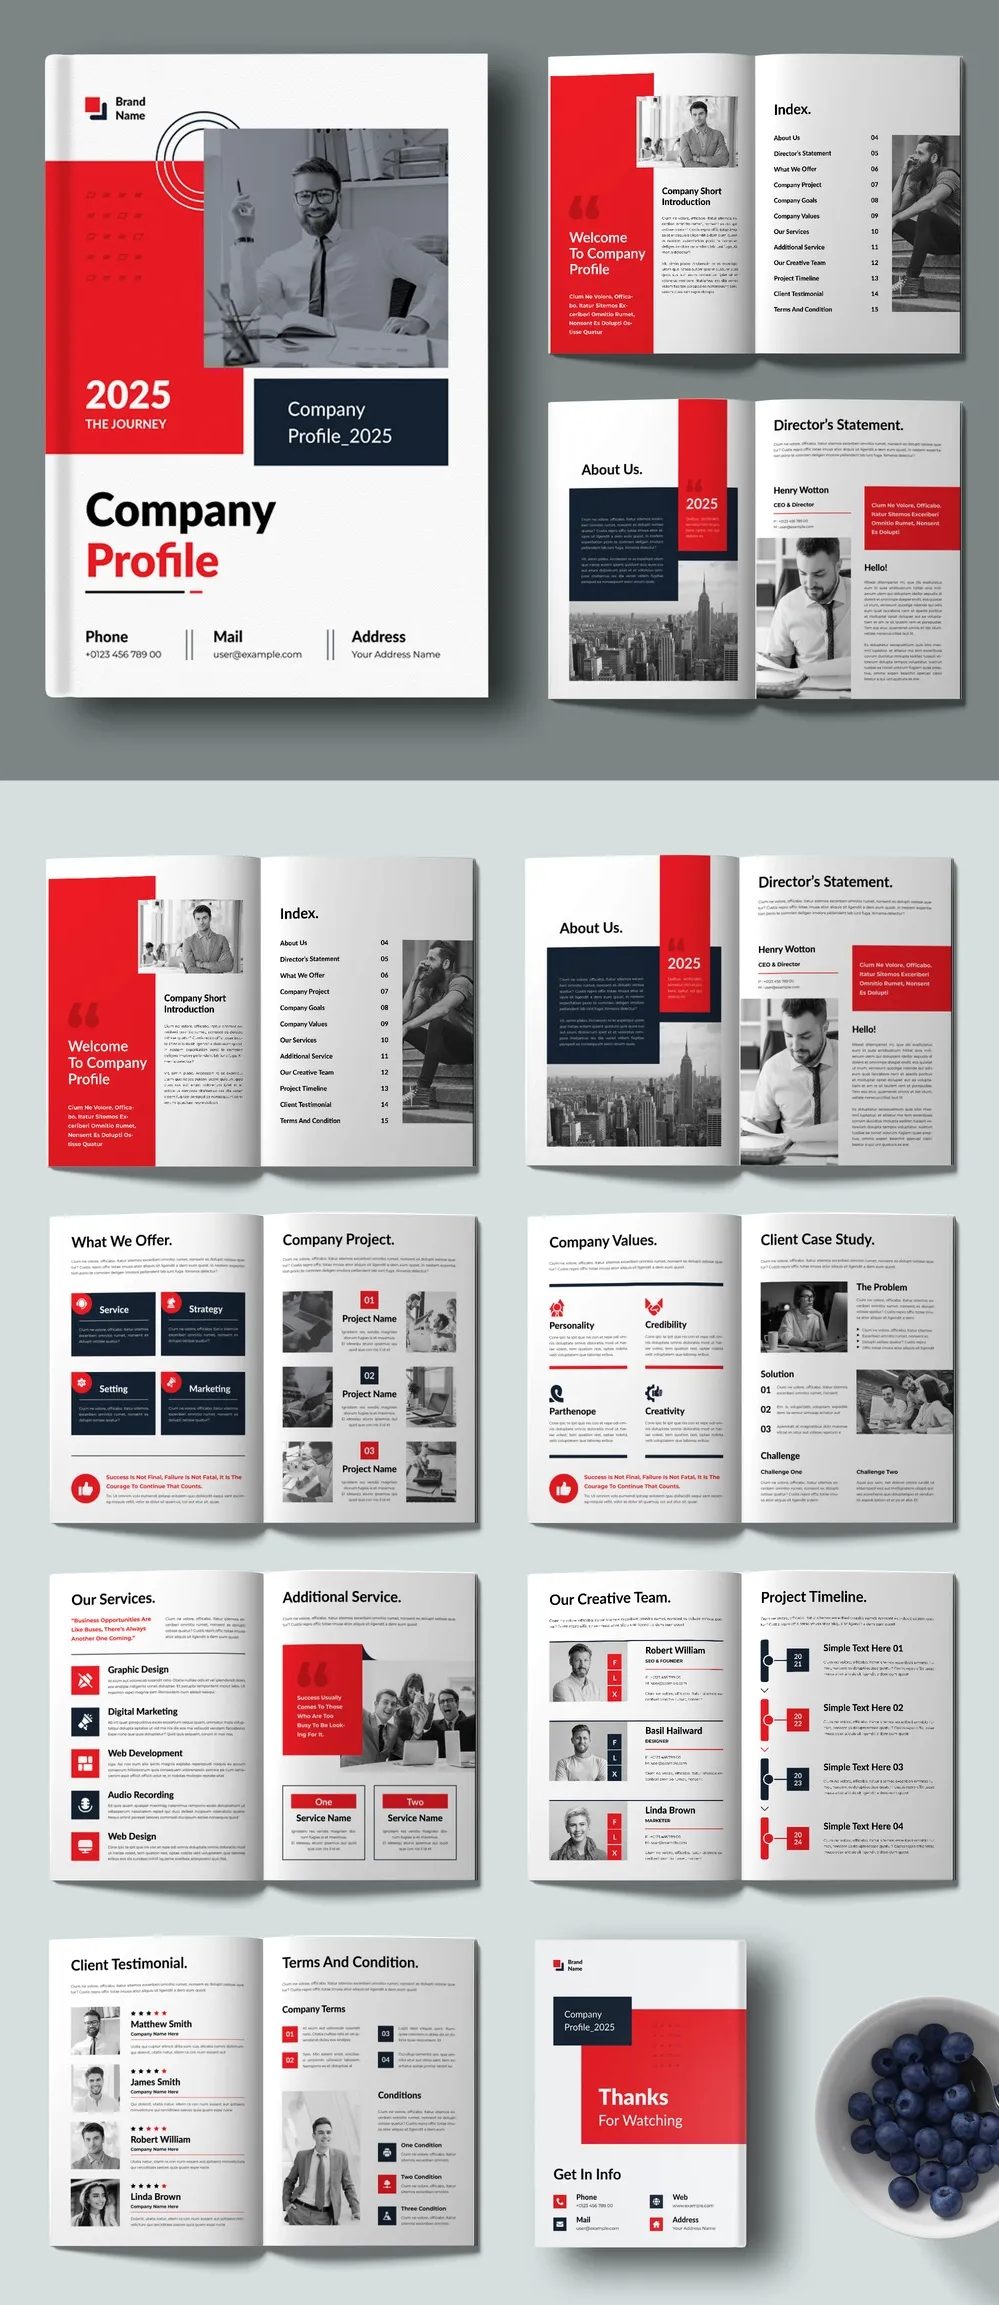 Adobestock - Corporate Company Profile With Red Color 728990258